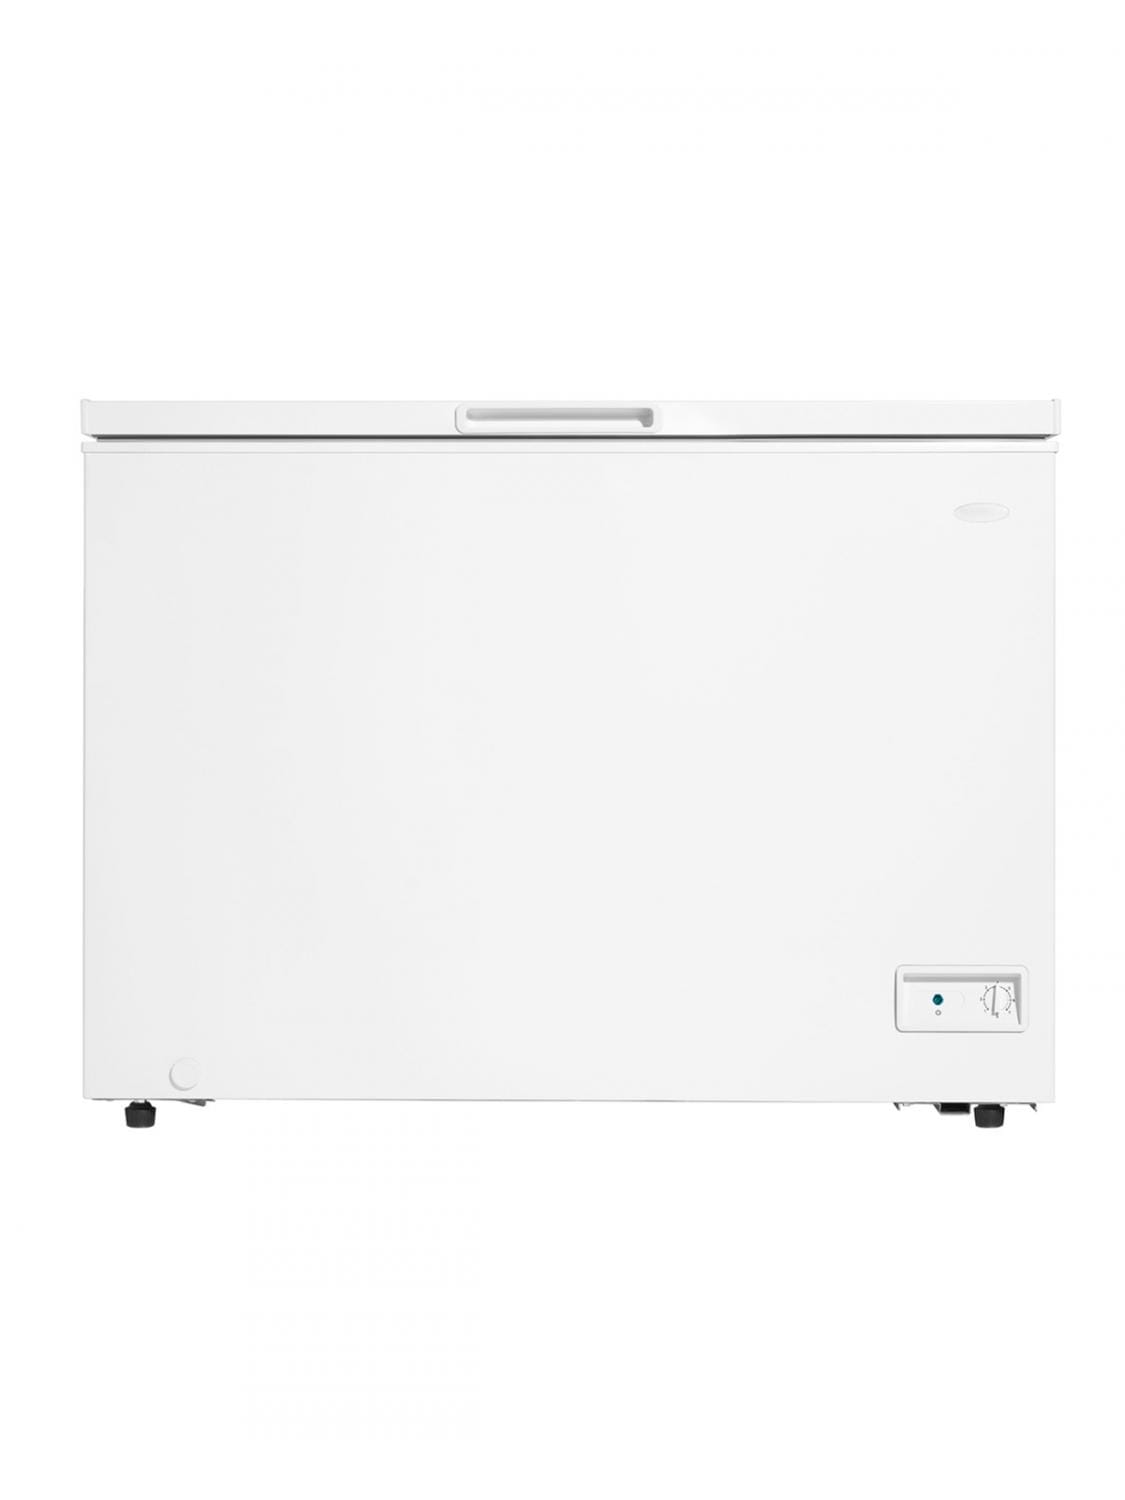 Danby - 10 cu. Ft  Chest Freezer in White - DCF100A6WM